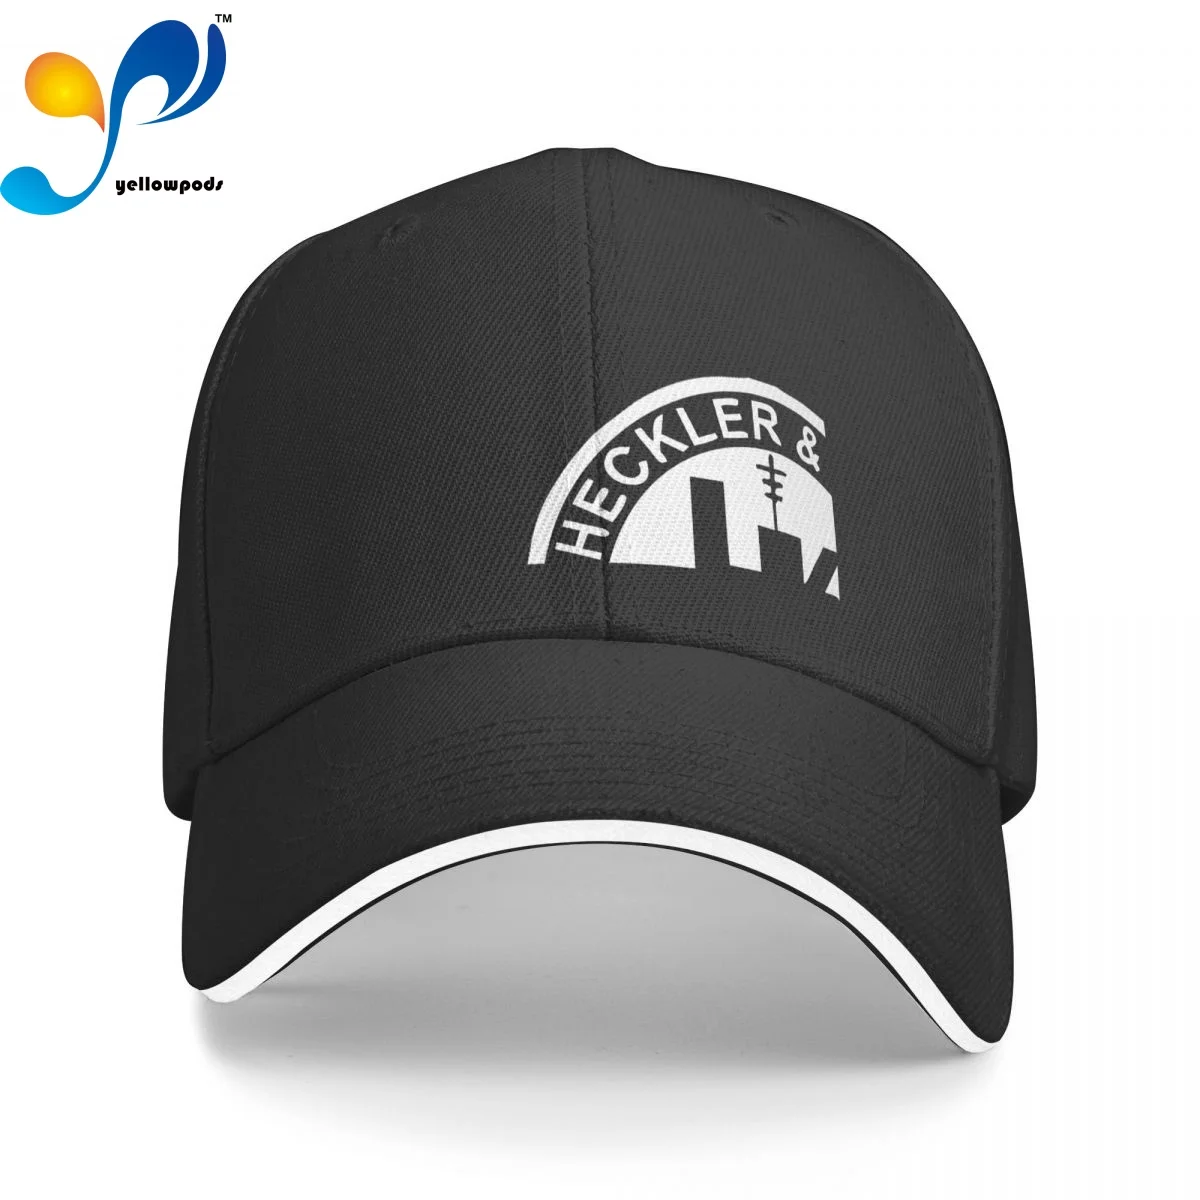 

Baseball Cap Men Hk Heckler Koch Logo Fashion Caps Hats for Logo Asquette Homme Dad Hat for Men Trucker Cap